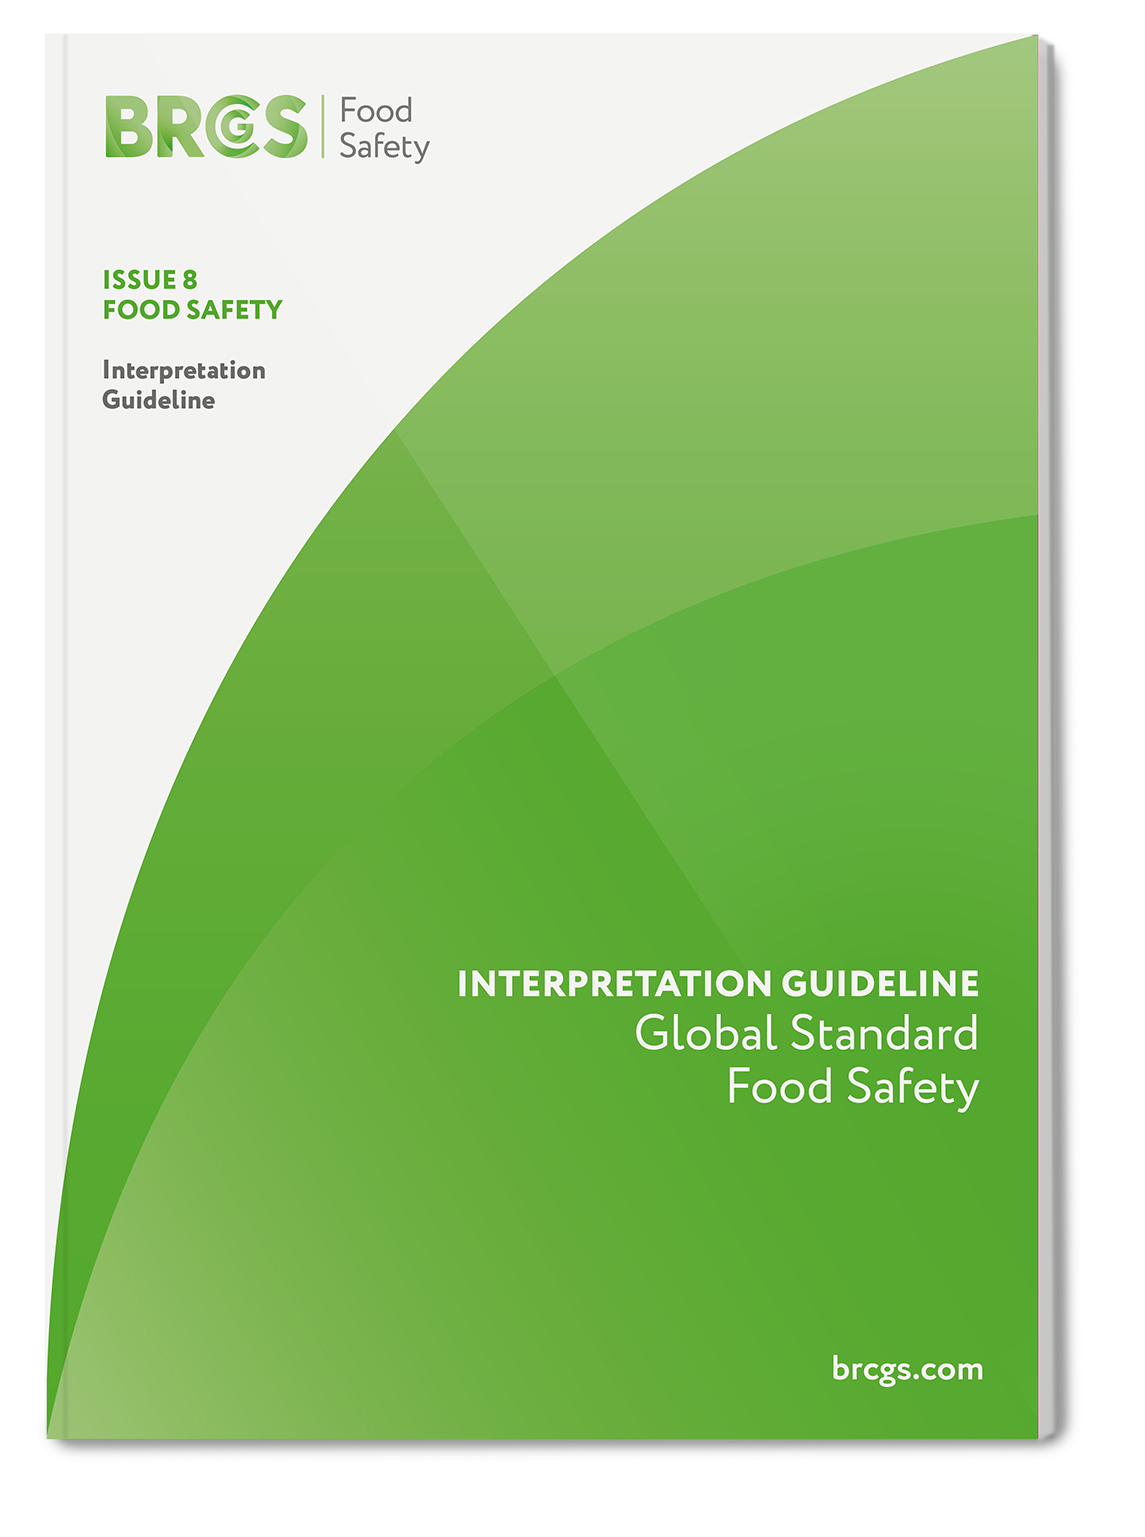 Global Standard Food Safety (Issue 8) Interpretation Guideline